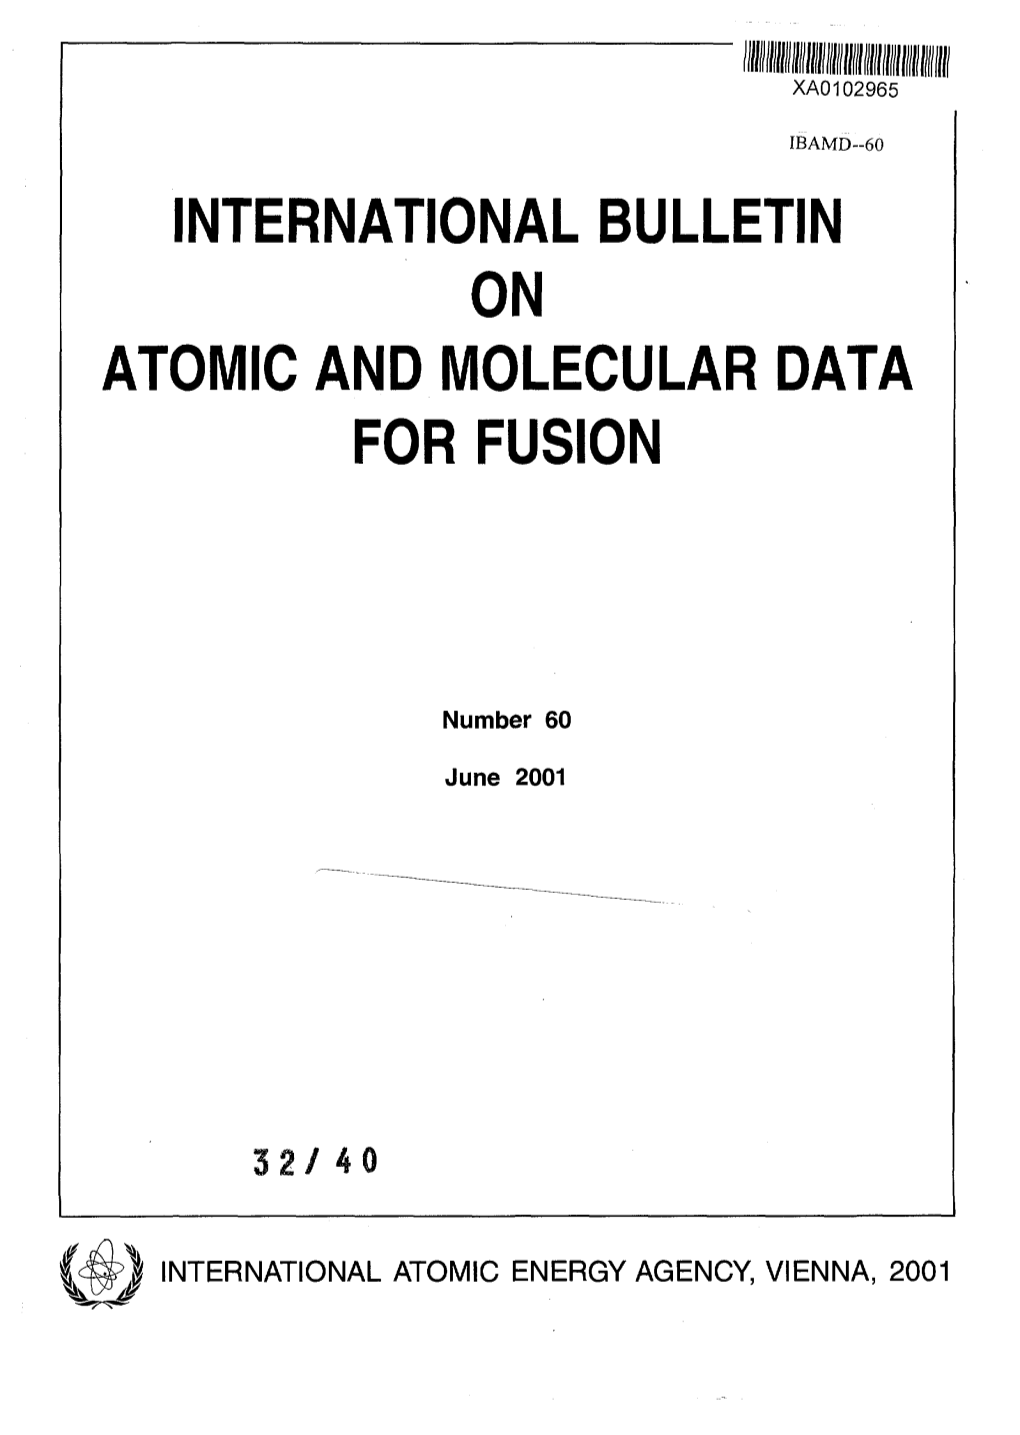 International Bulletin on Atomic and Molecular Data for Fusion